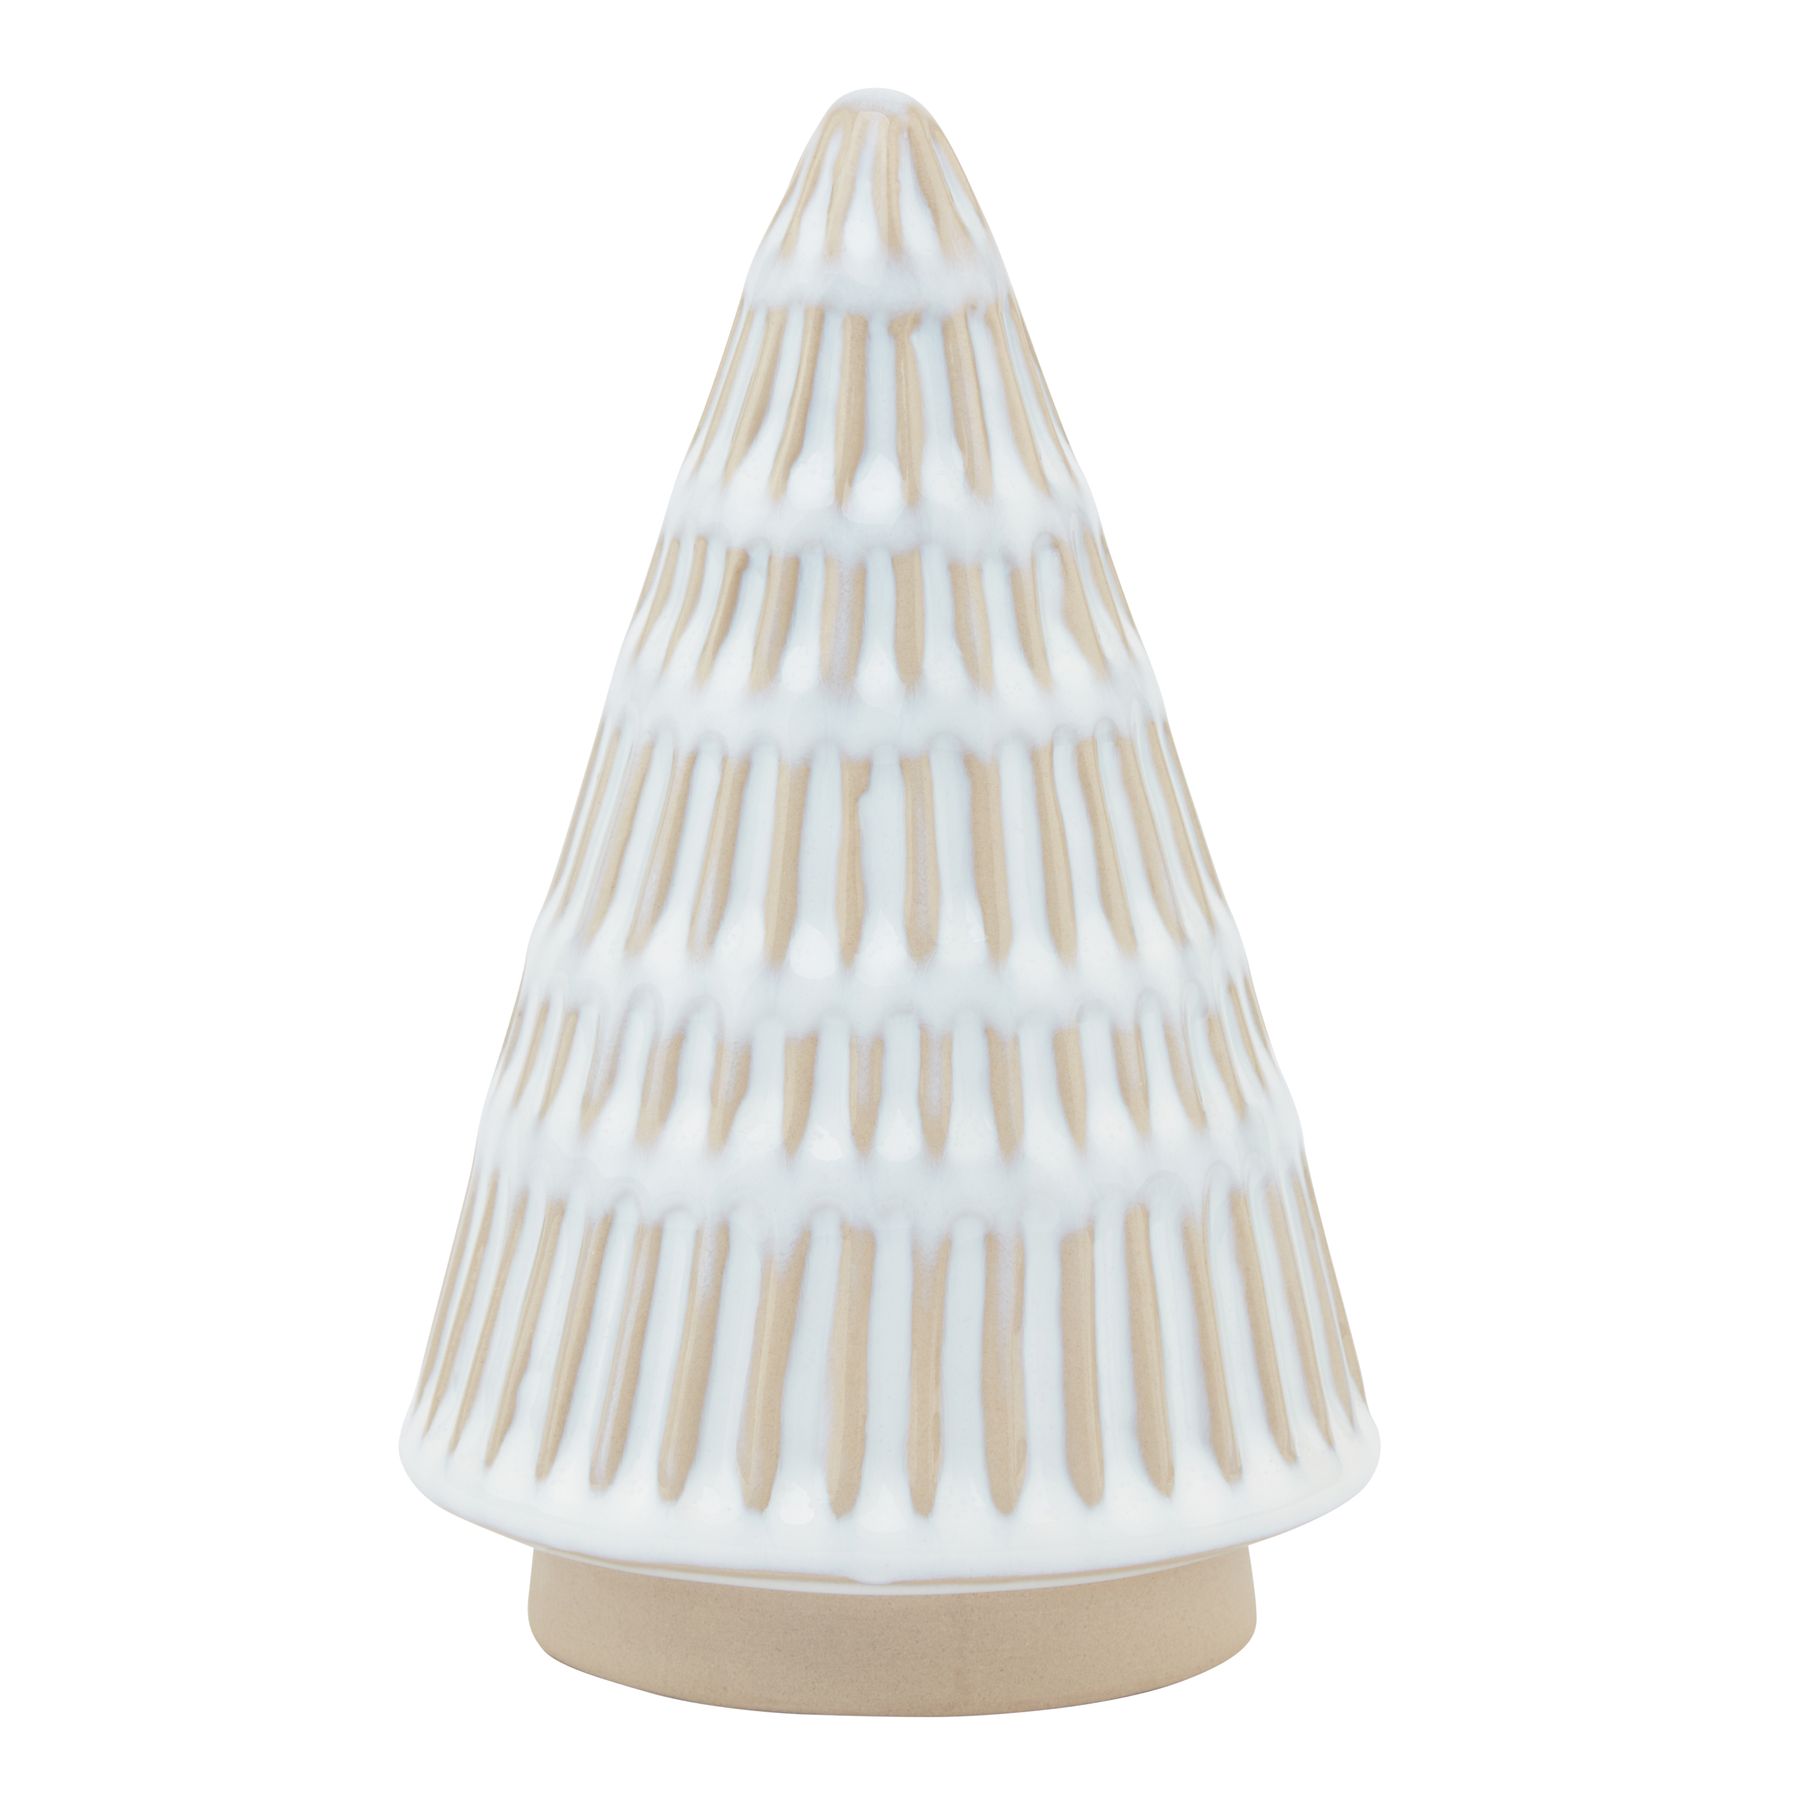 Ceramic White Christmas Tree Ornament - Image 1